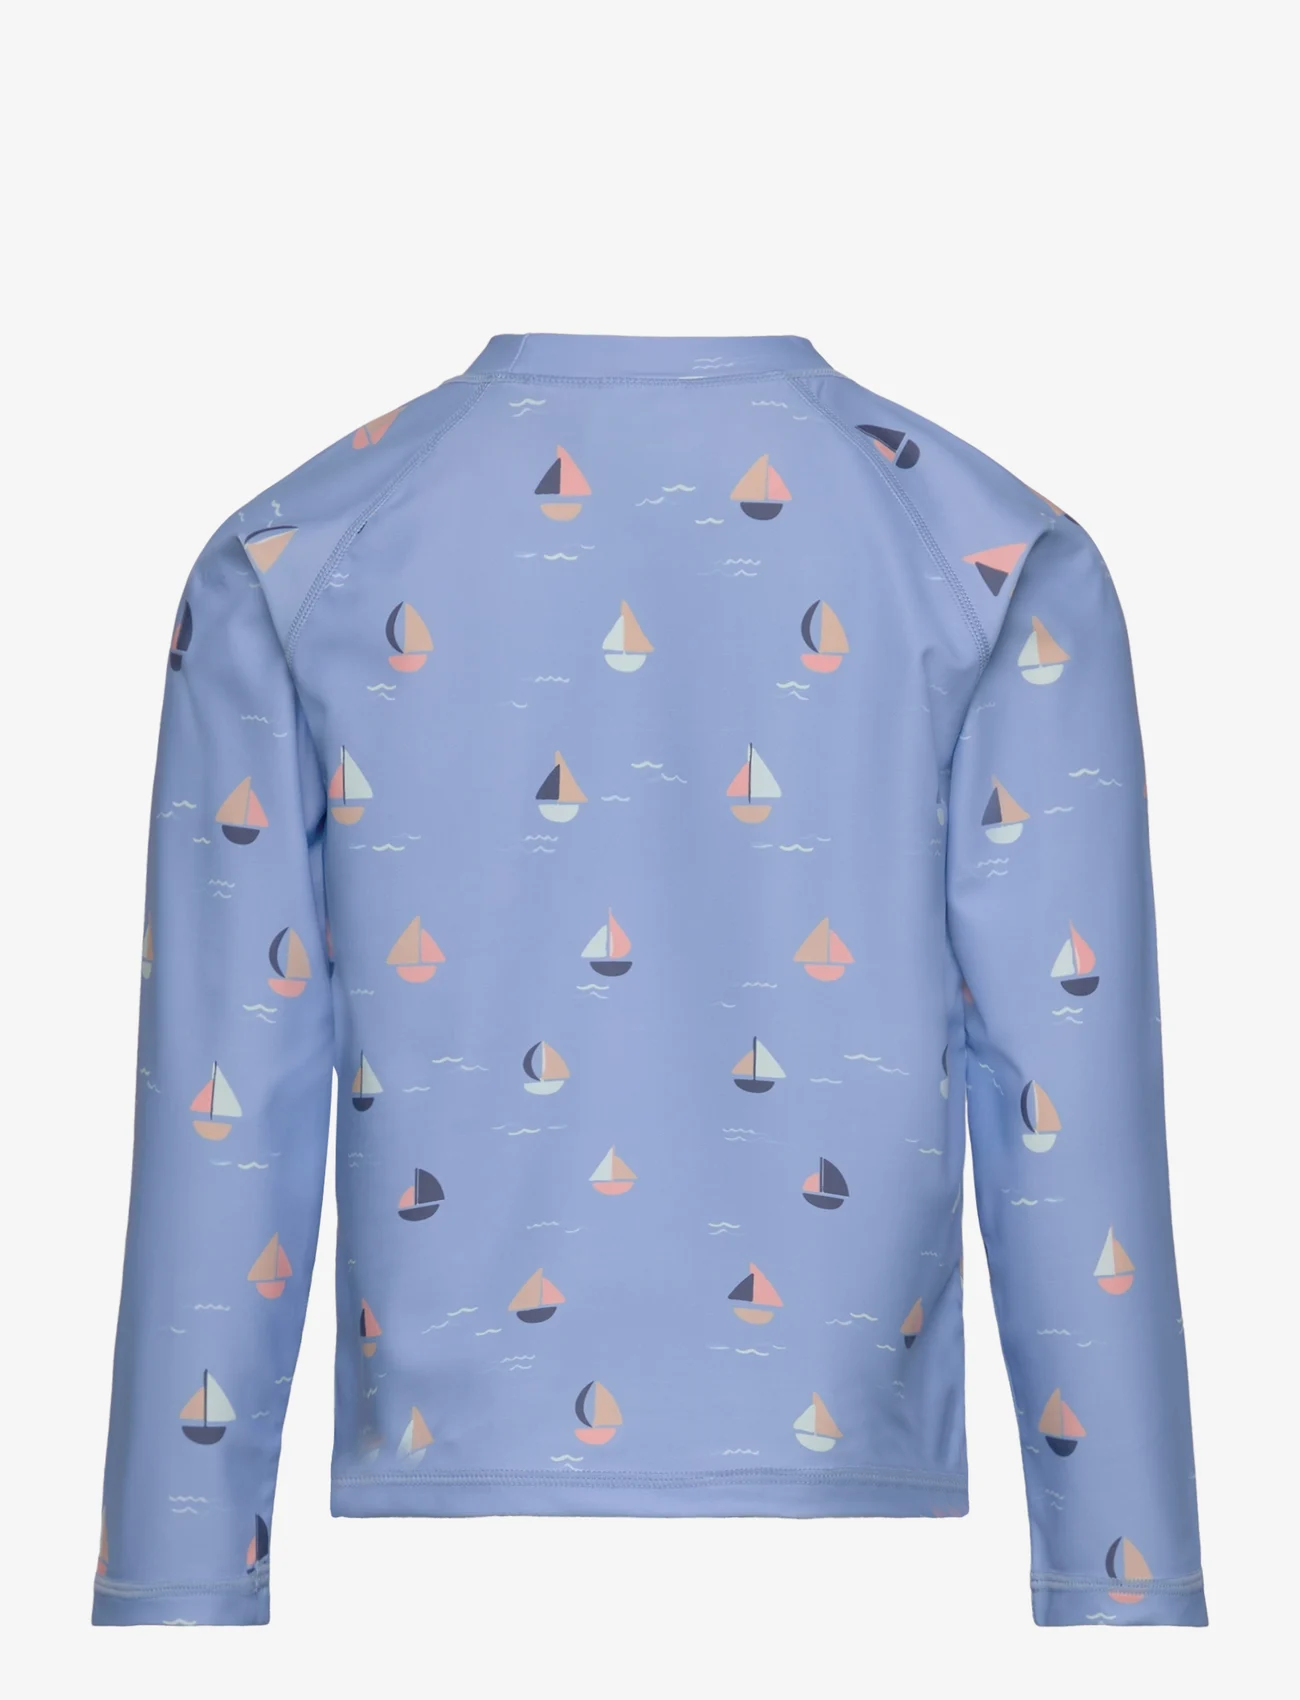 Geggamoja - UV Long-sleeve Sweater - sommarfynd - light blue sailor - 1